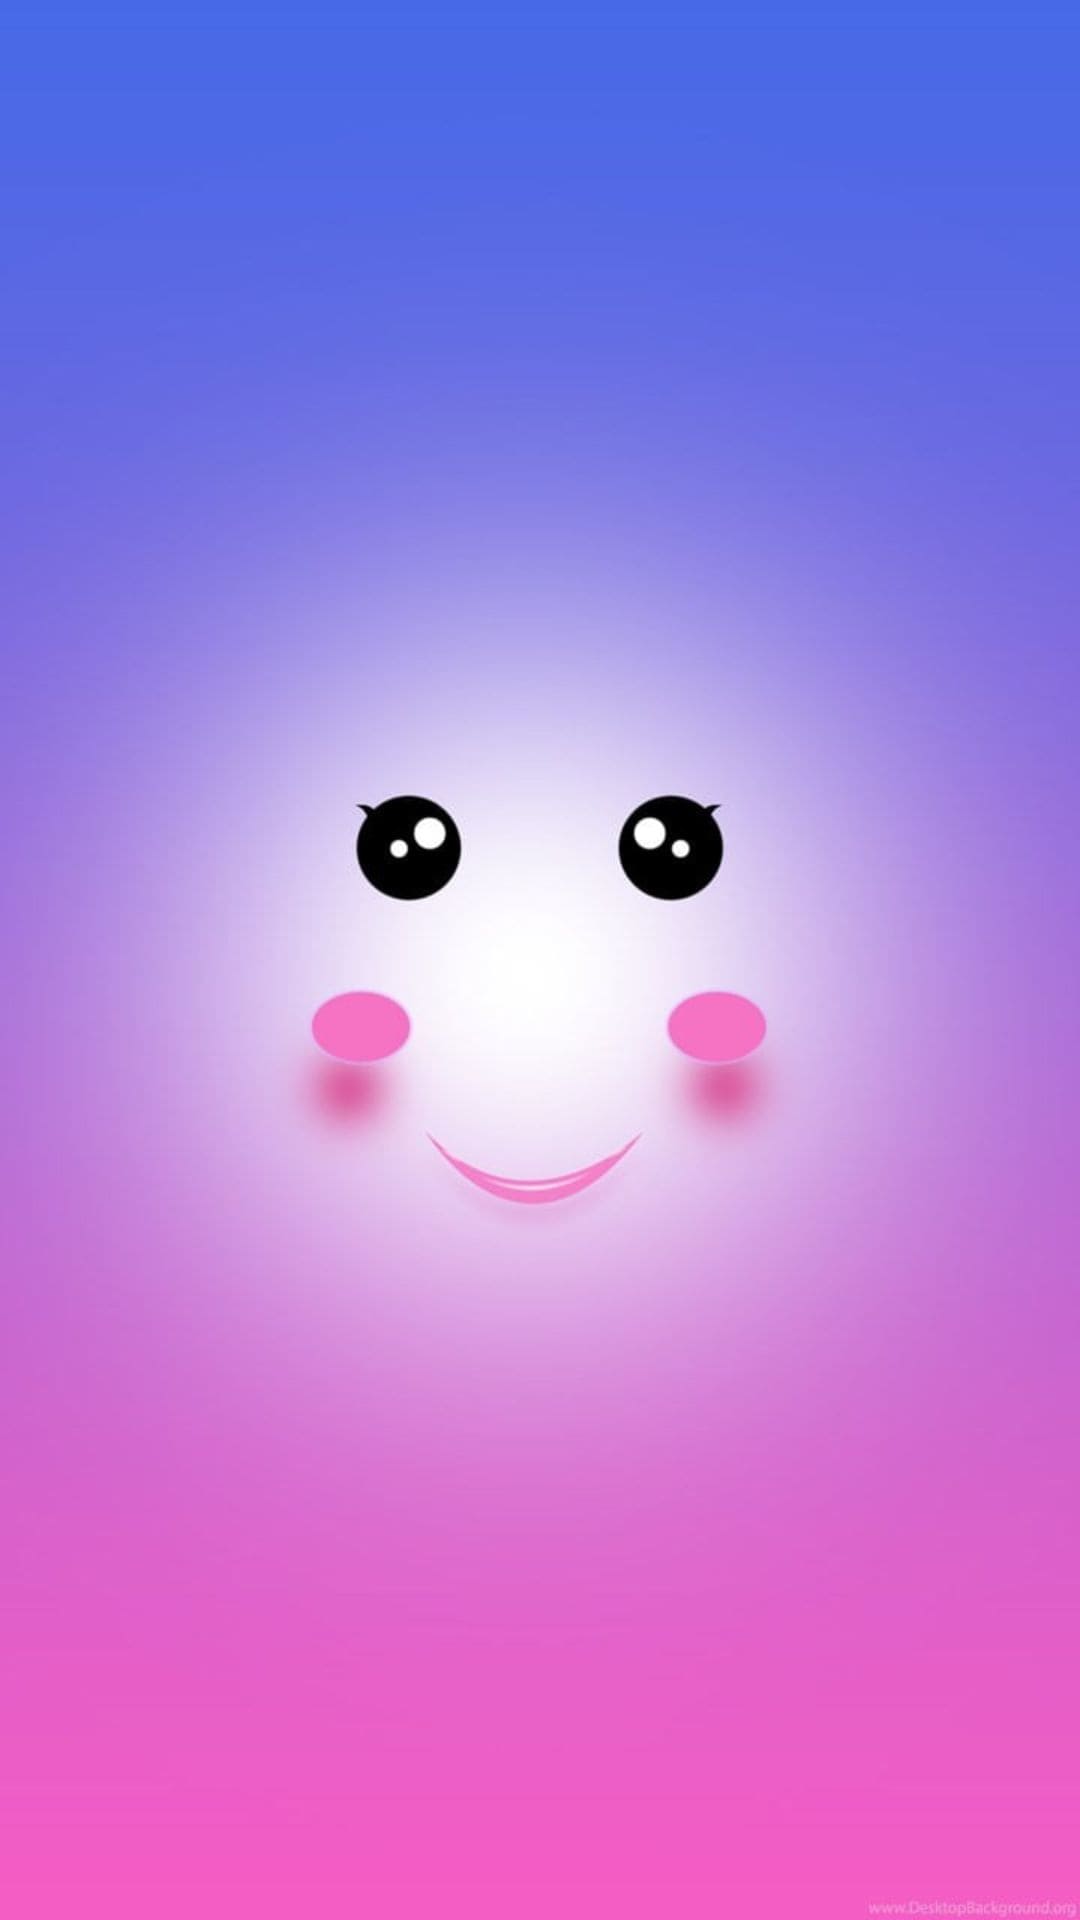 Cute Smiley Face Wallpaper Free Cute Wallpaper Download